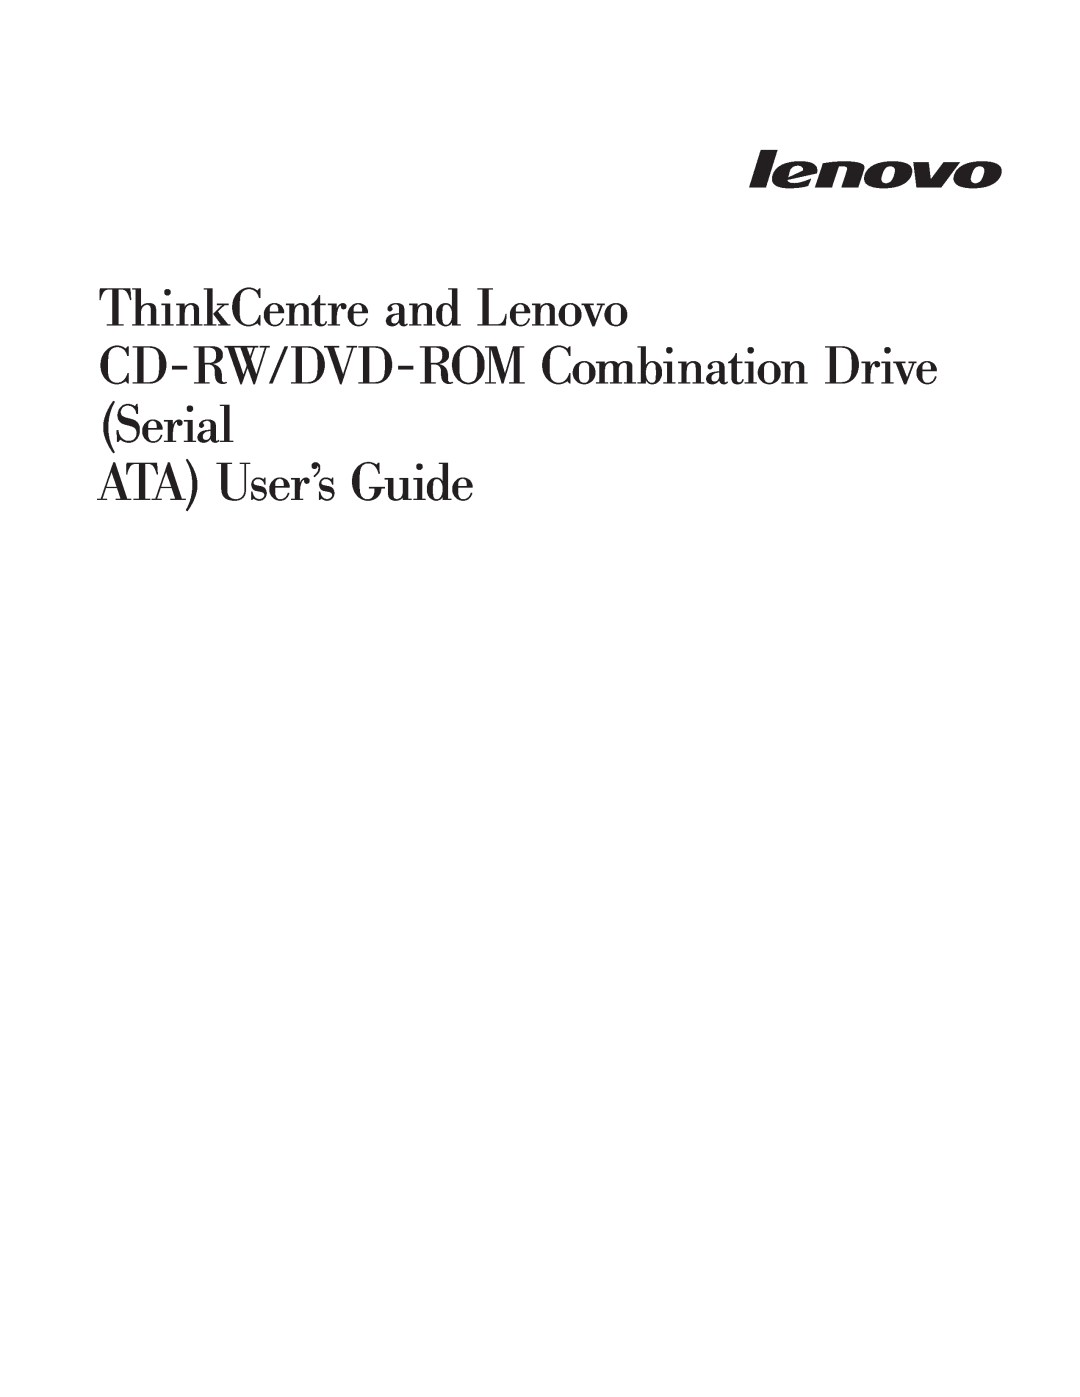 Lenovo 41N5624 manual ThinkCentre and Lenovo, CD-RW/DVD-ROMCombination Drive Serial, ATA User’s Guide 